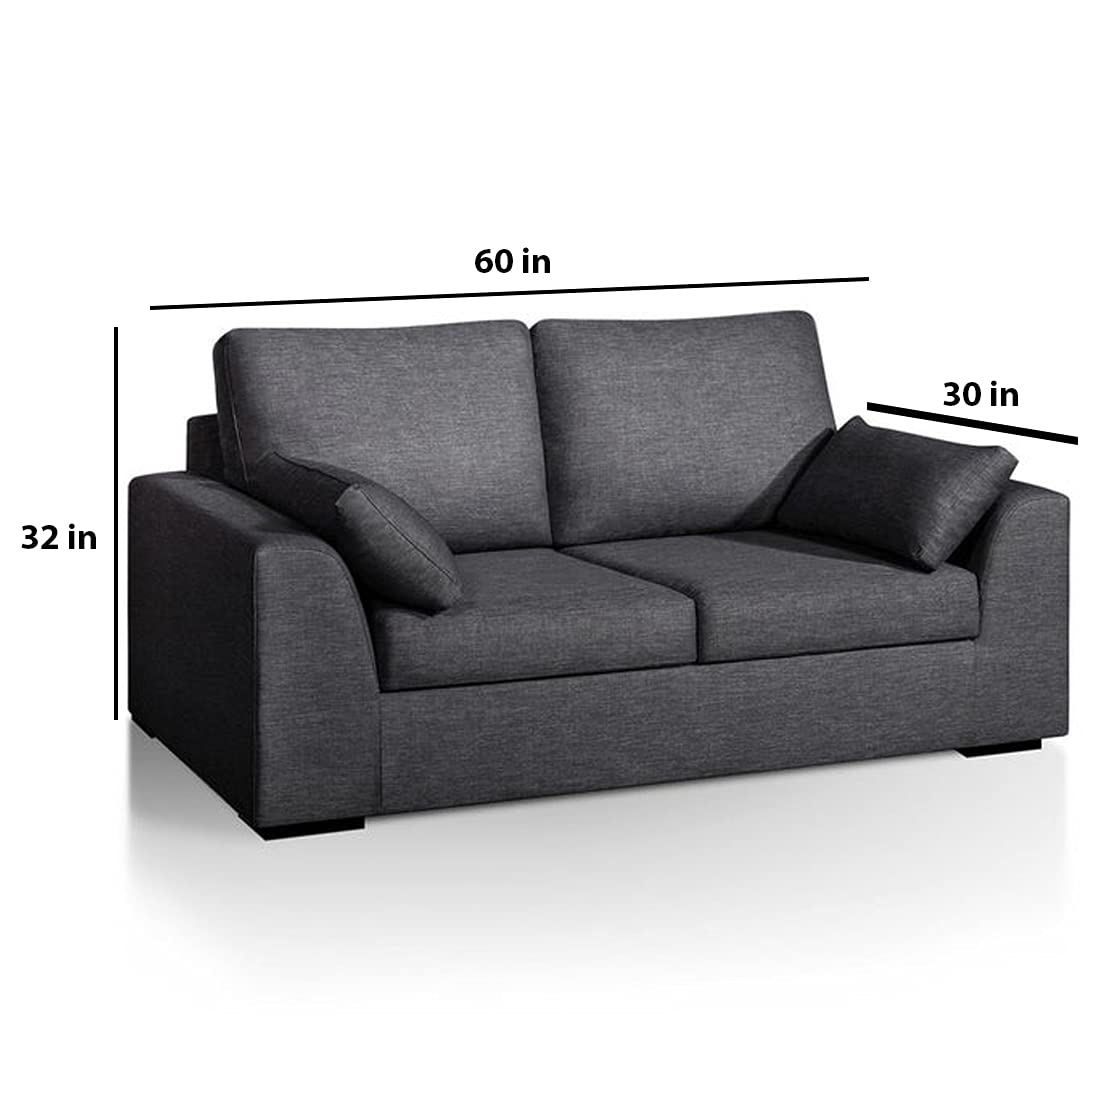 Kane 2 Seater Fabric Sofa for Living Room (Dark Grey) - Torque India